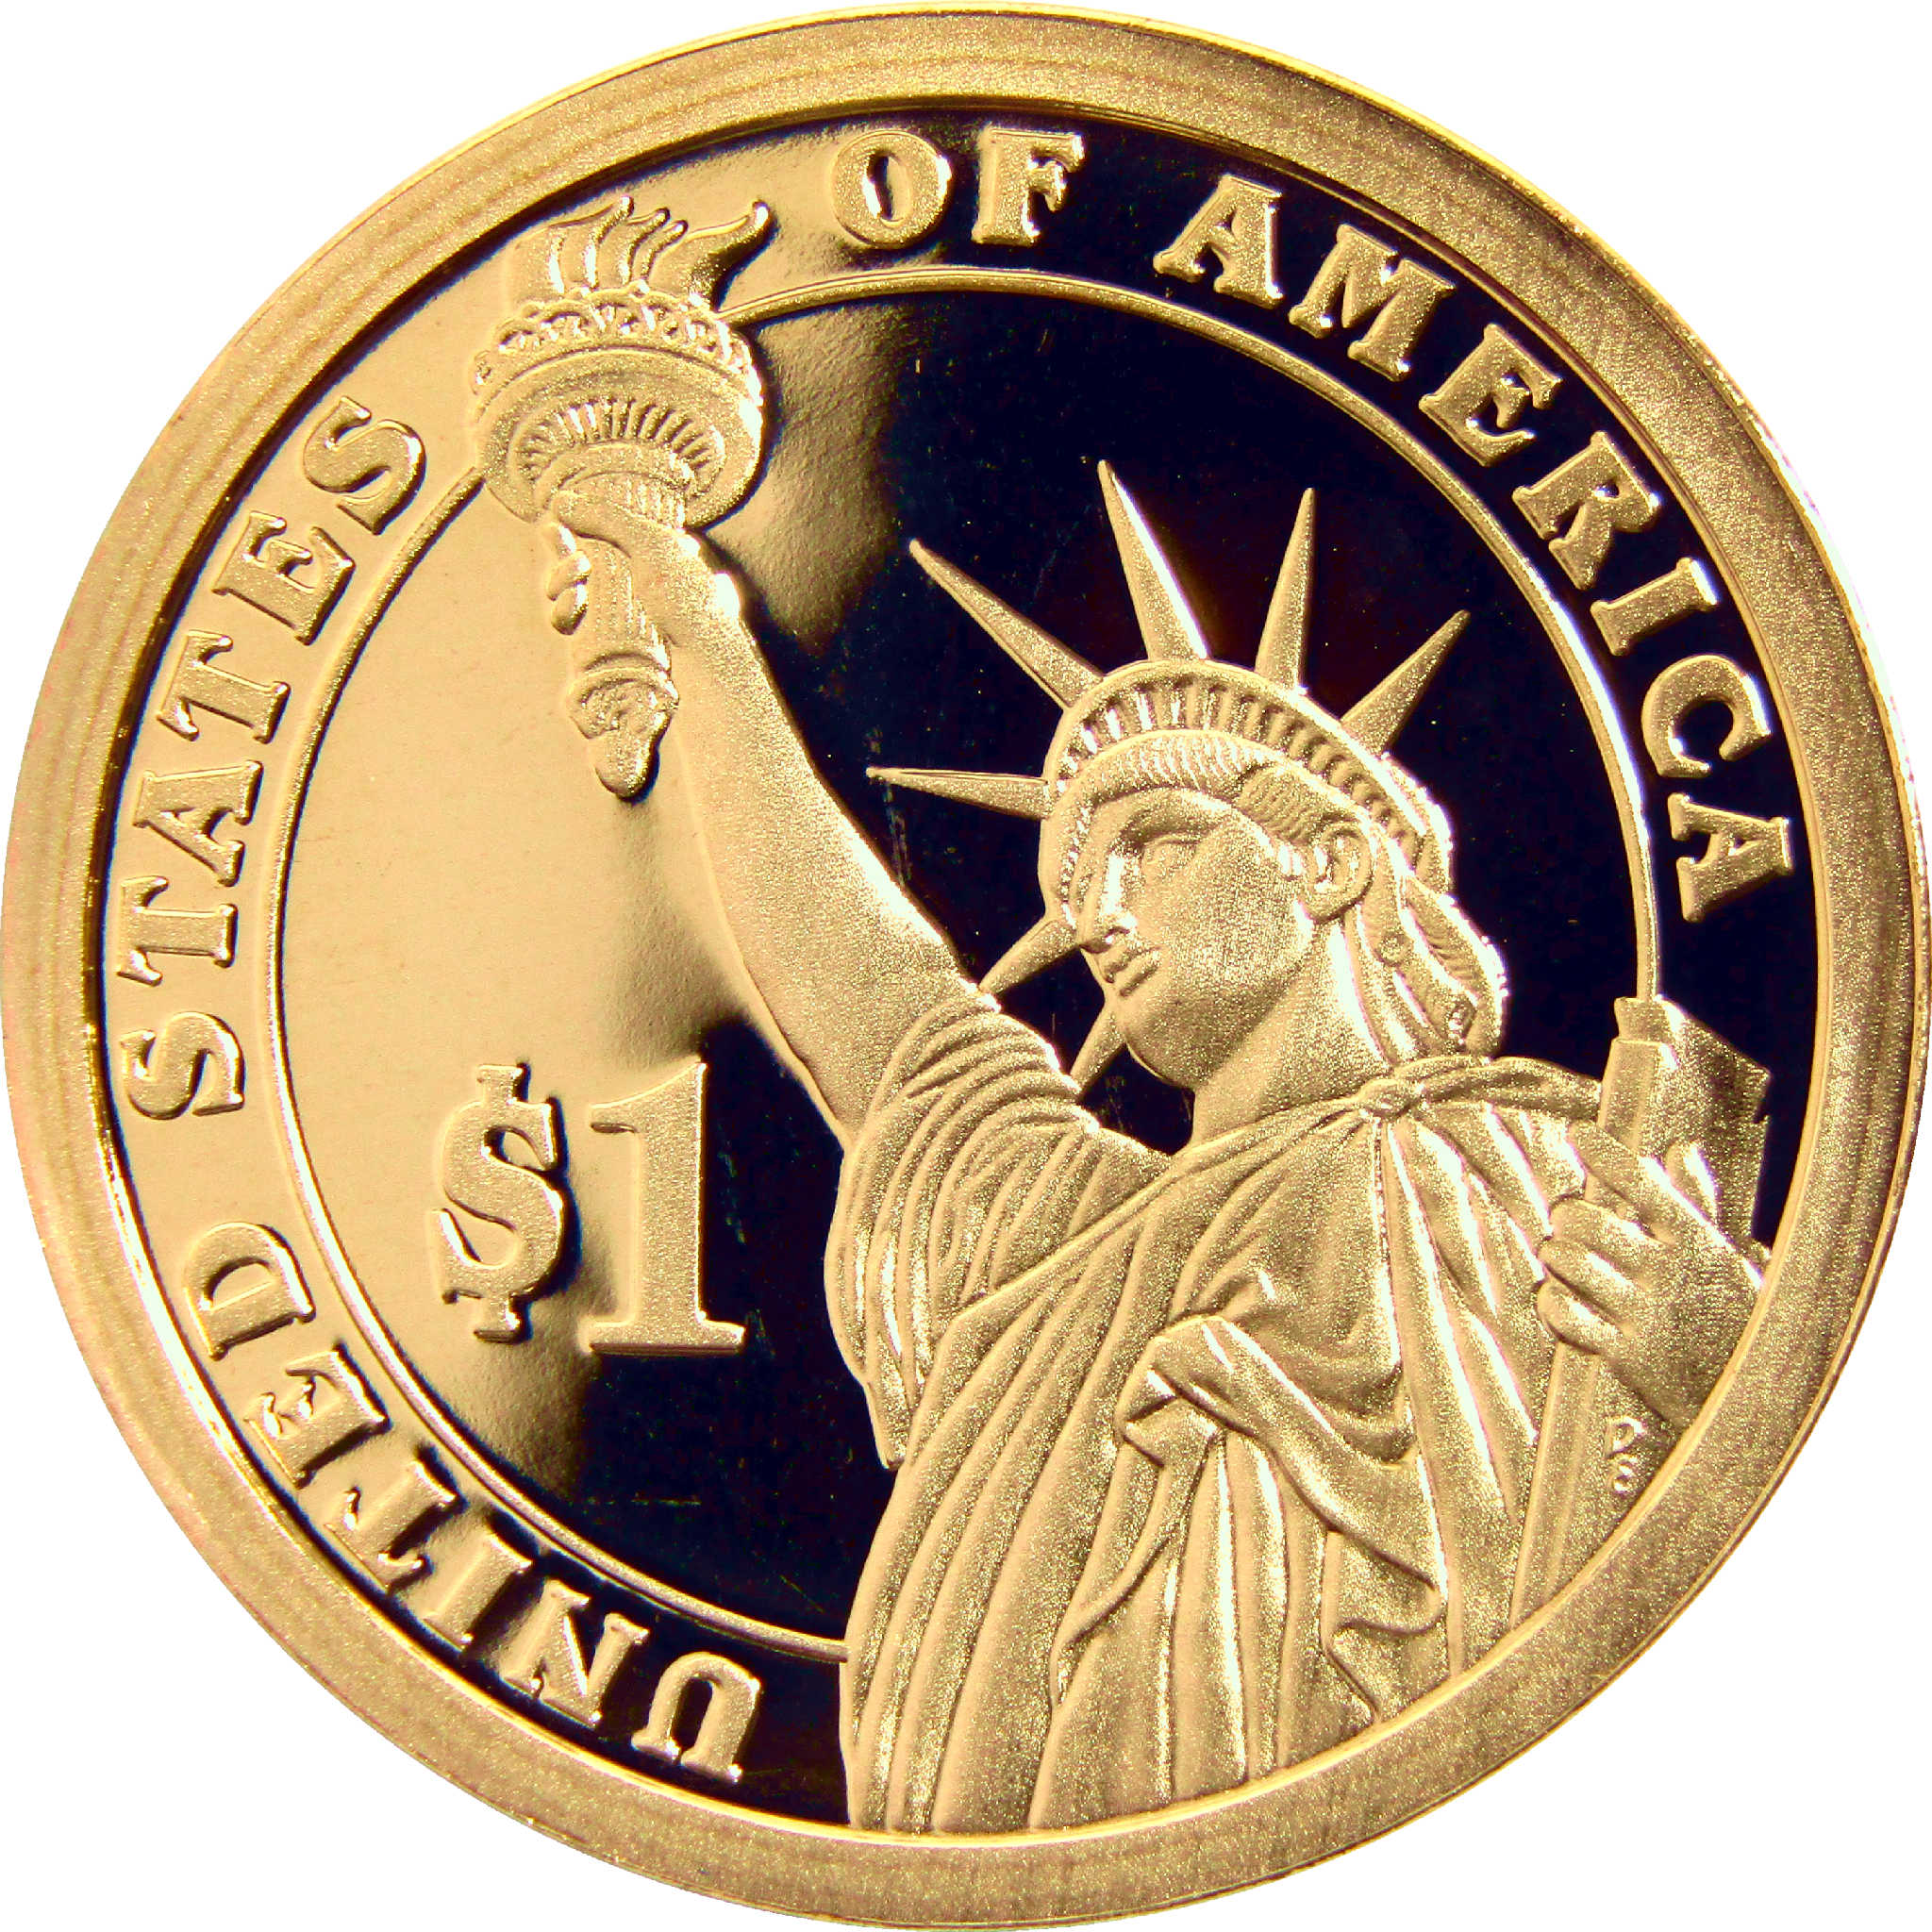 2014 S Herbert Hoover Presidential Dollar Choice Proof $1 Coin